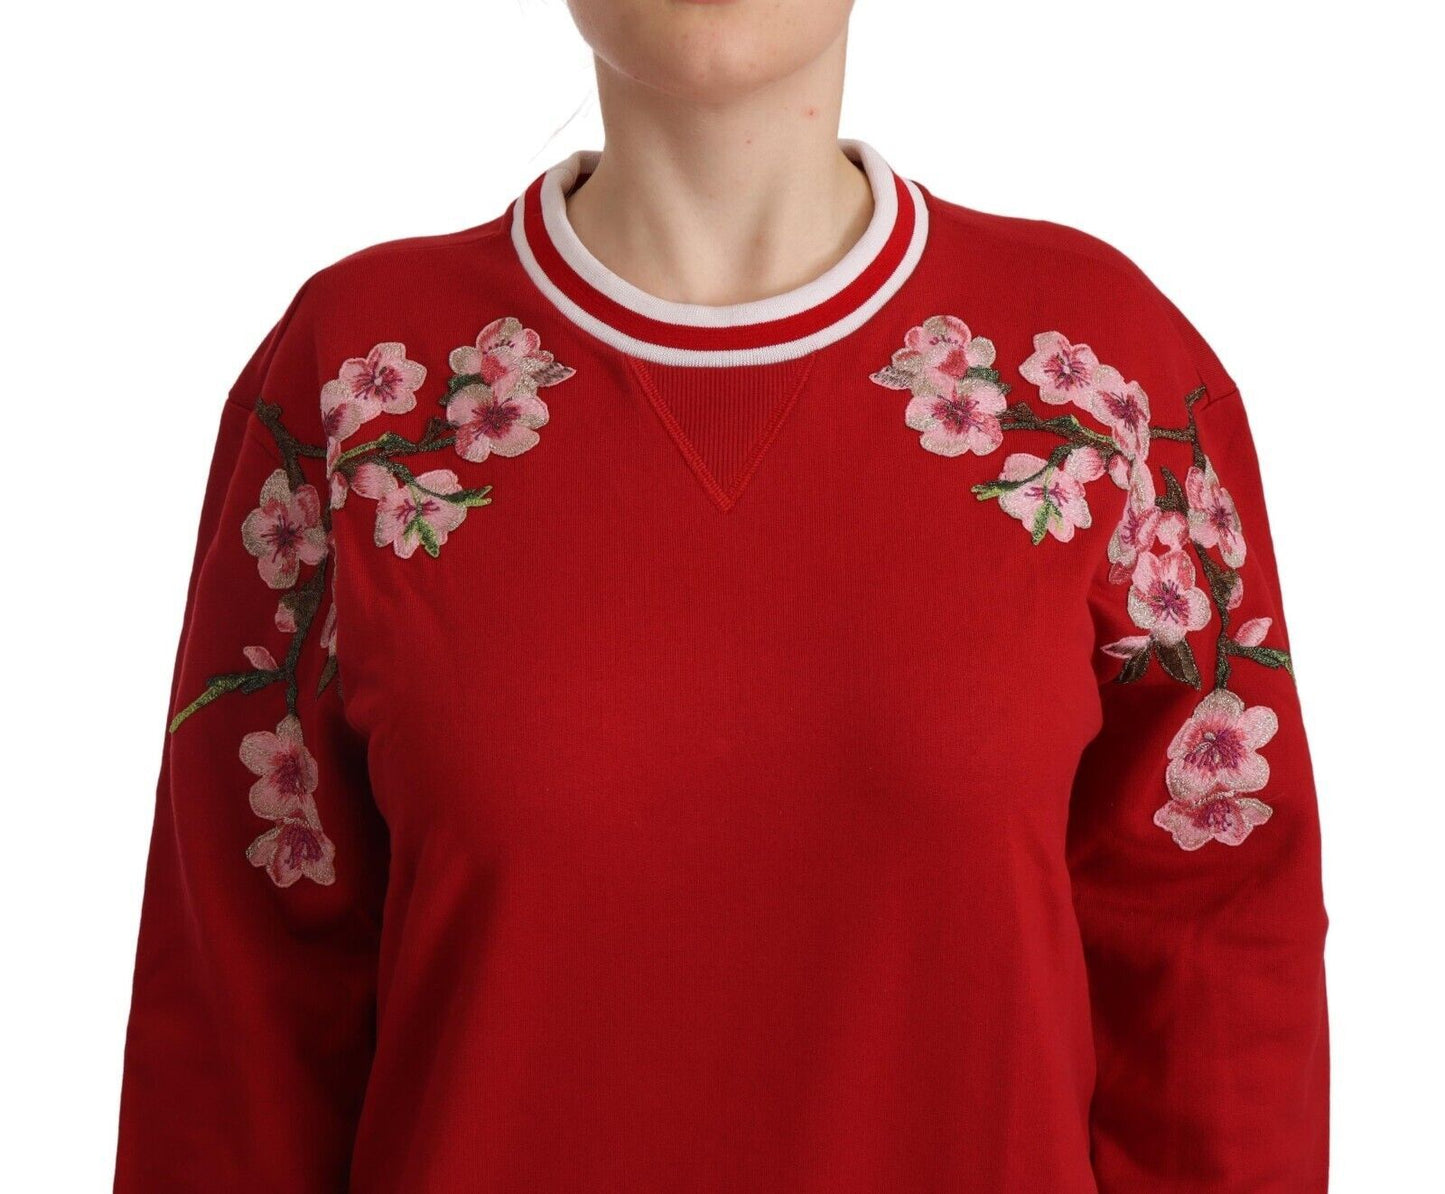 Dolce & Gabbana Red Cotton Crewneck #DGlove Pullover Sweater